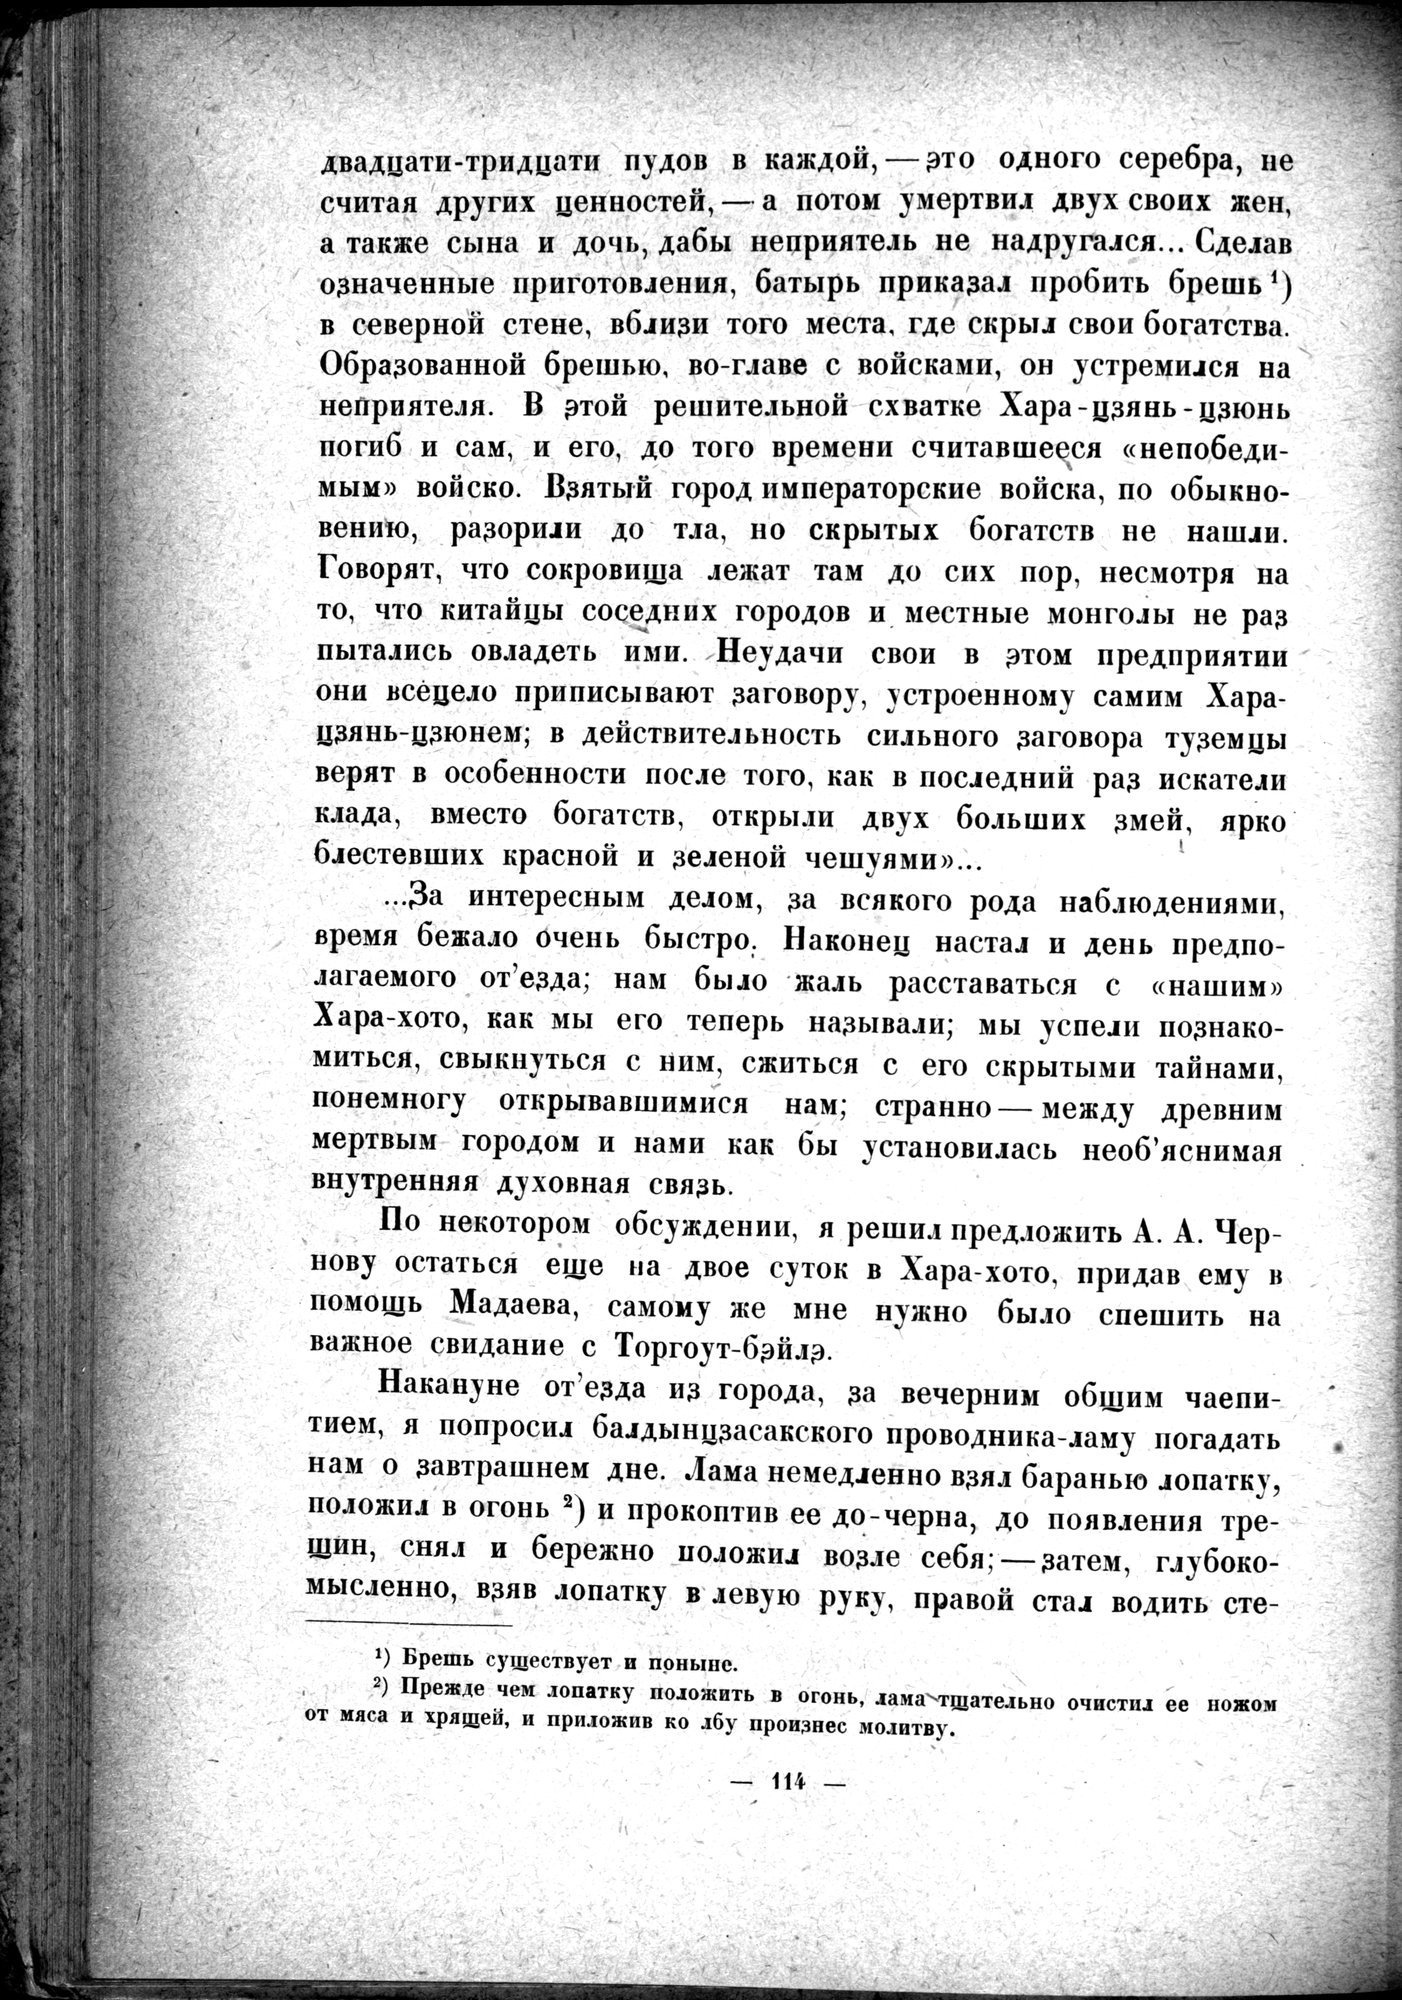 Mongoliya i Amdo i mertby gorod Khara-Khoto : vol.1 / Page 140 (Grayscale High Resolution Image)